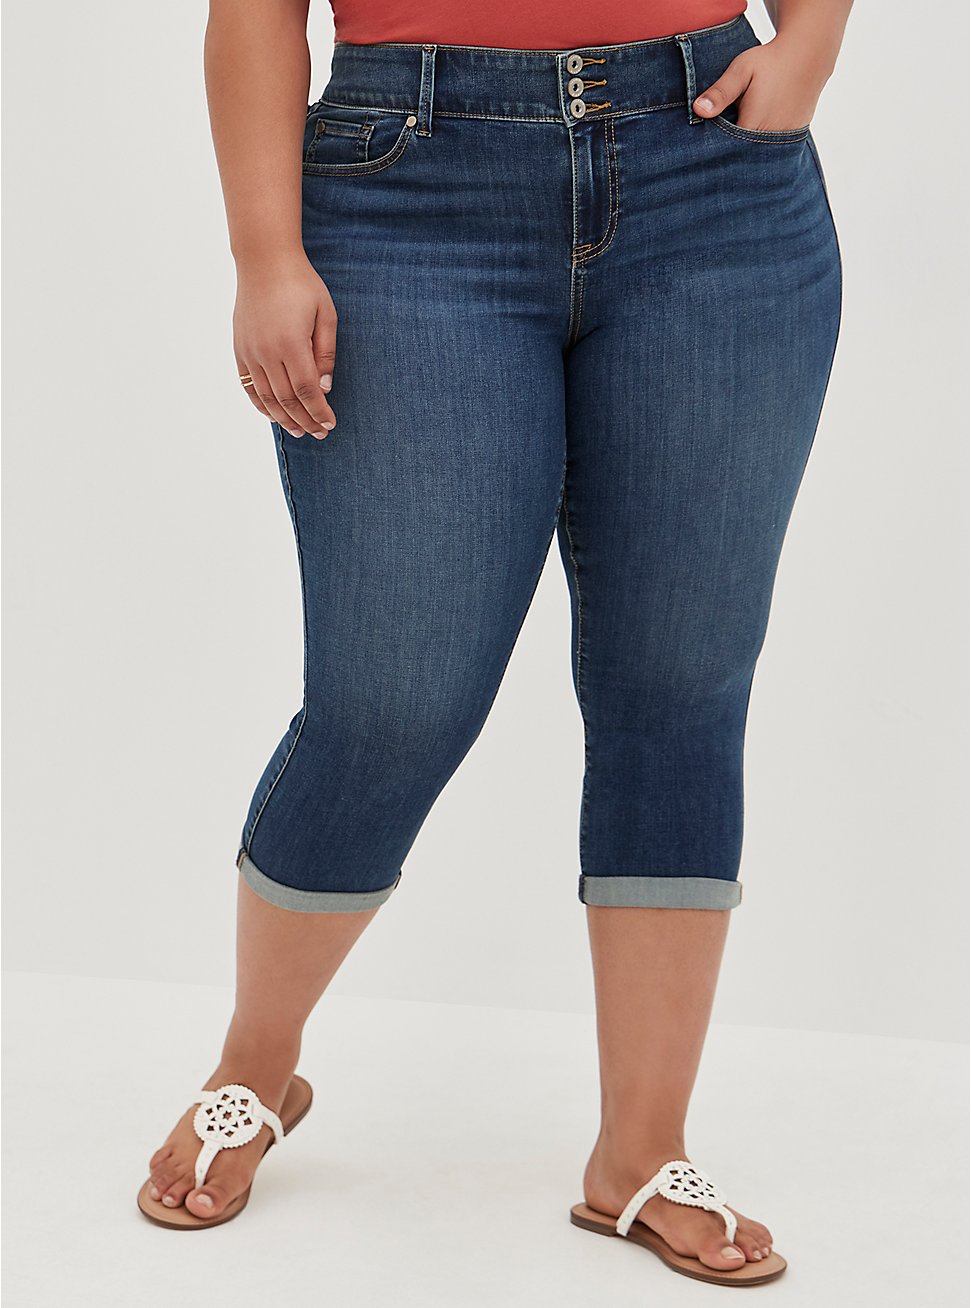 WOMEN FASHION Jeans Print White/Black 34                  EU discount 94% Zara Jeggings & Skinny & Slim 